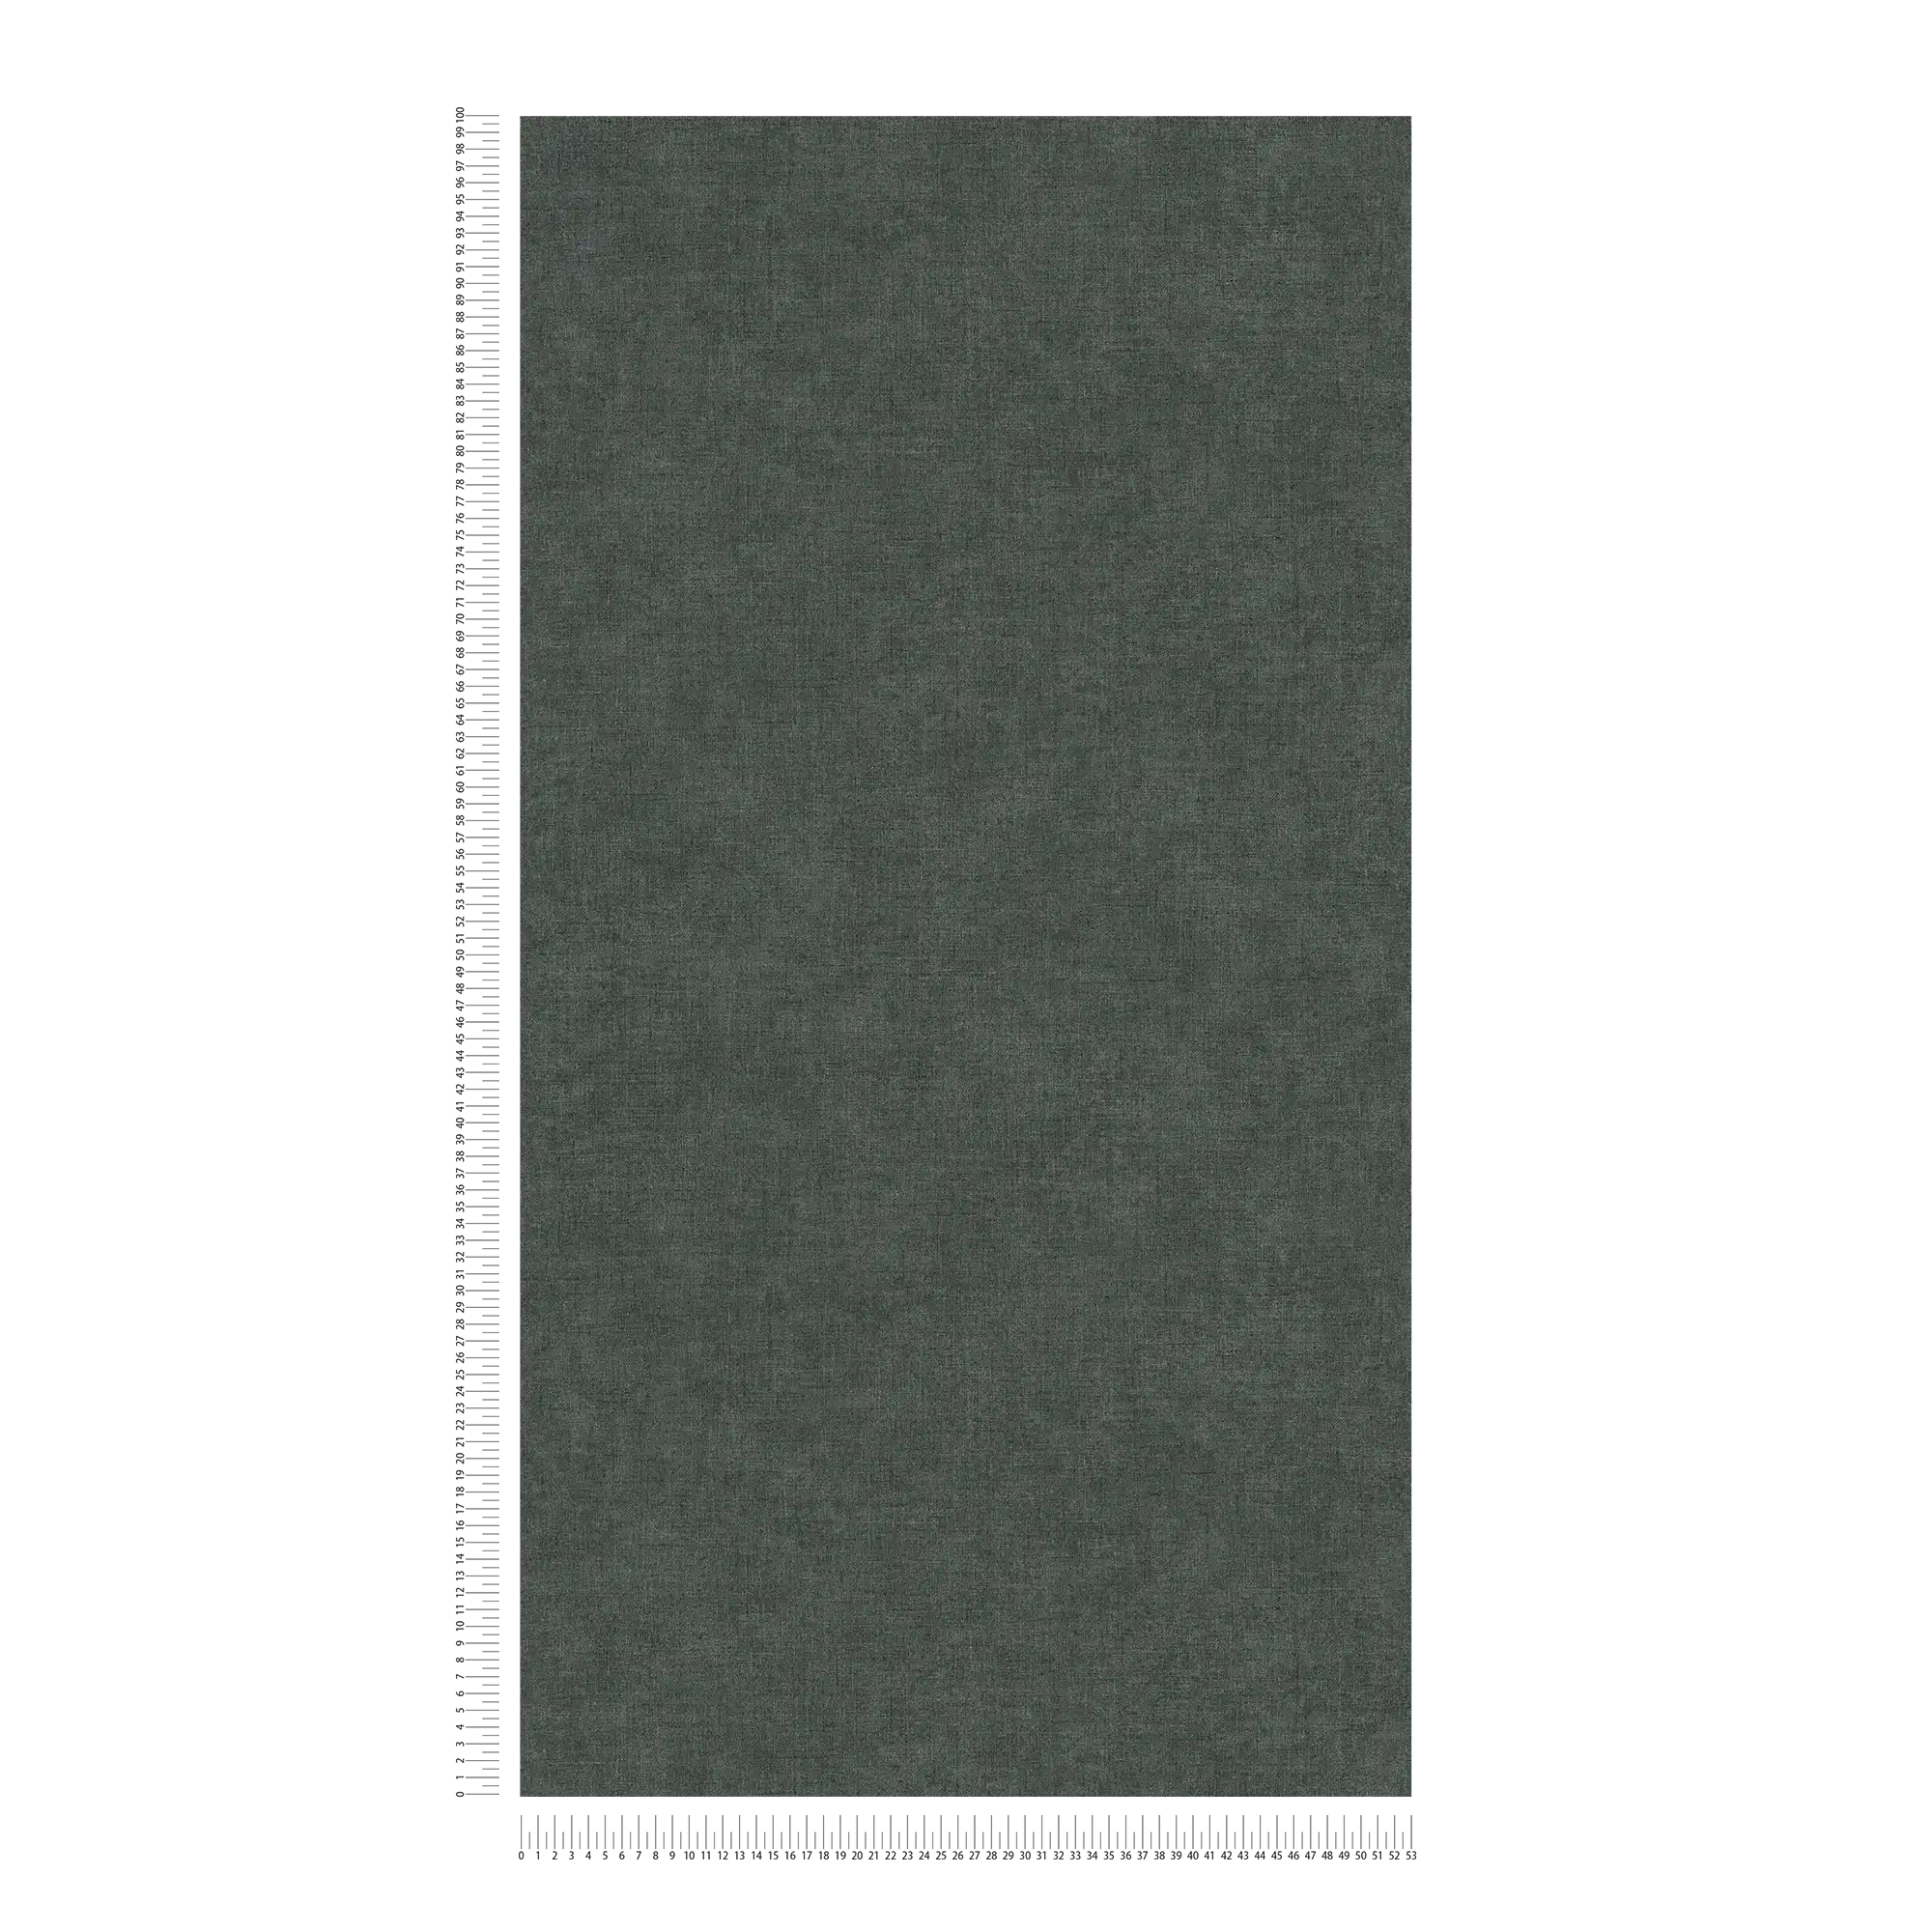             Anthracite wallpaper black-grey monochrome & matt
        